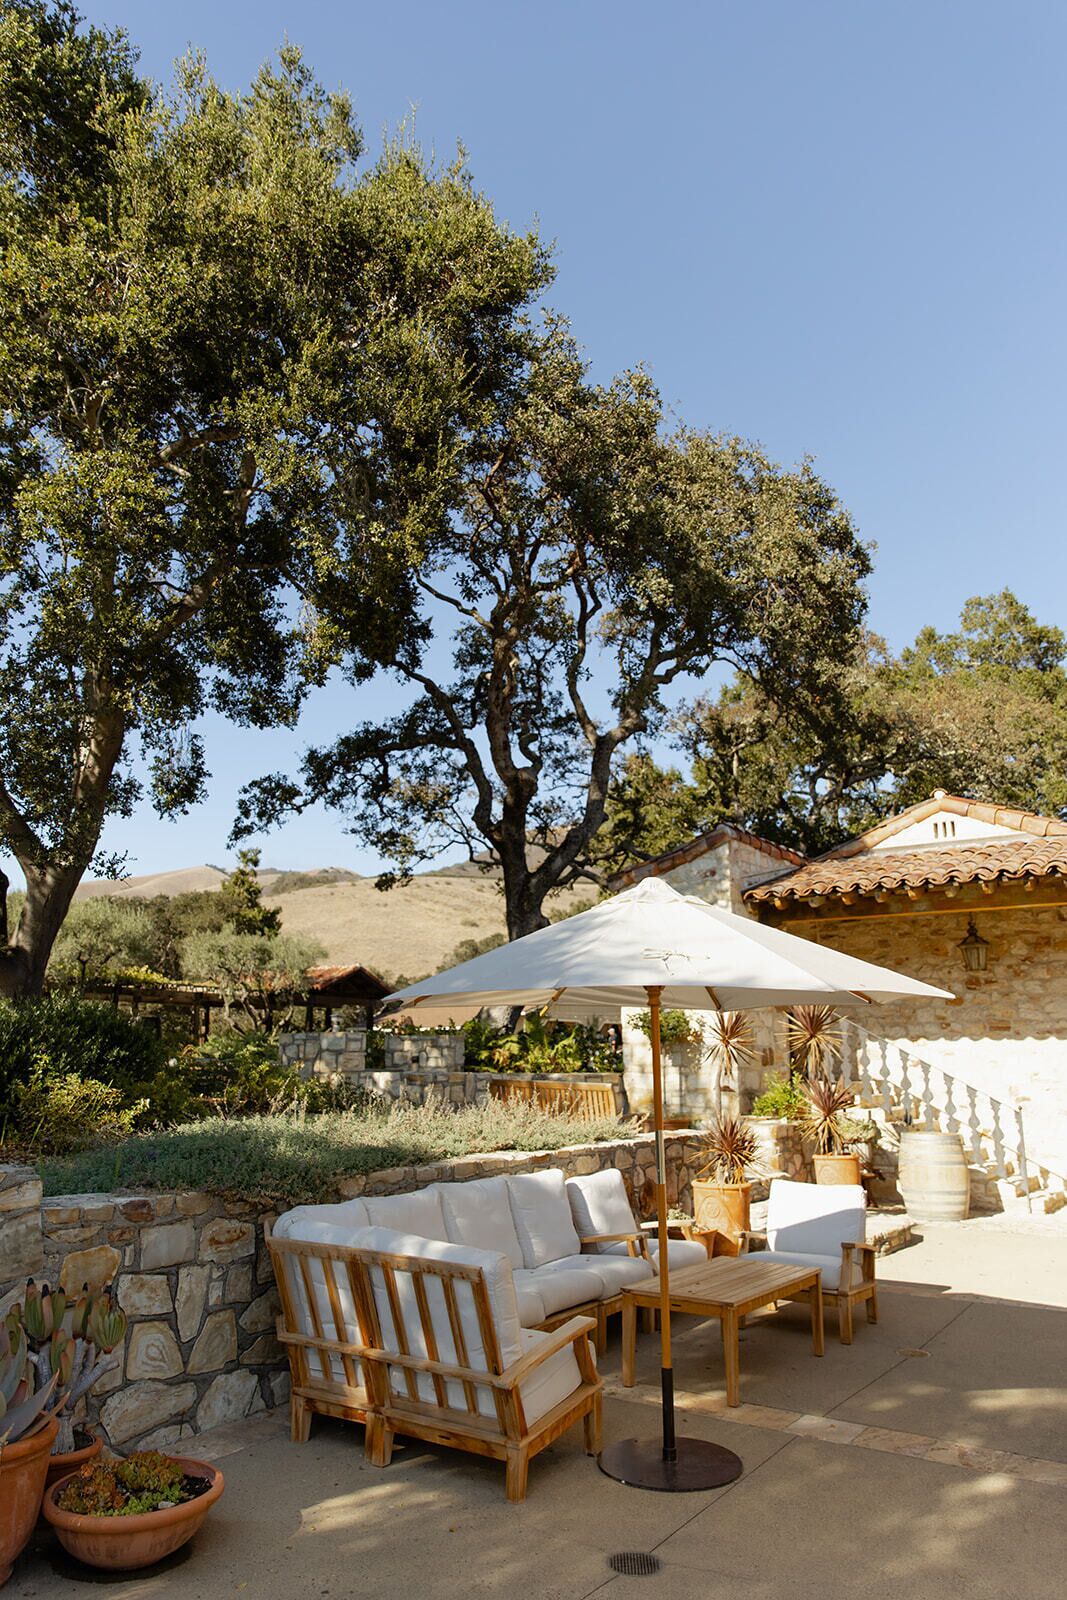 Holman Ranch Estate Vineyard & Winery